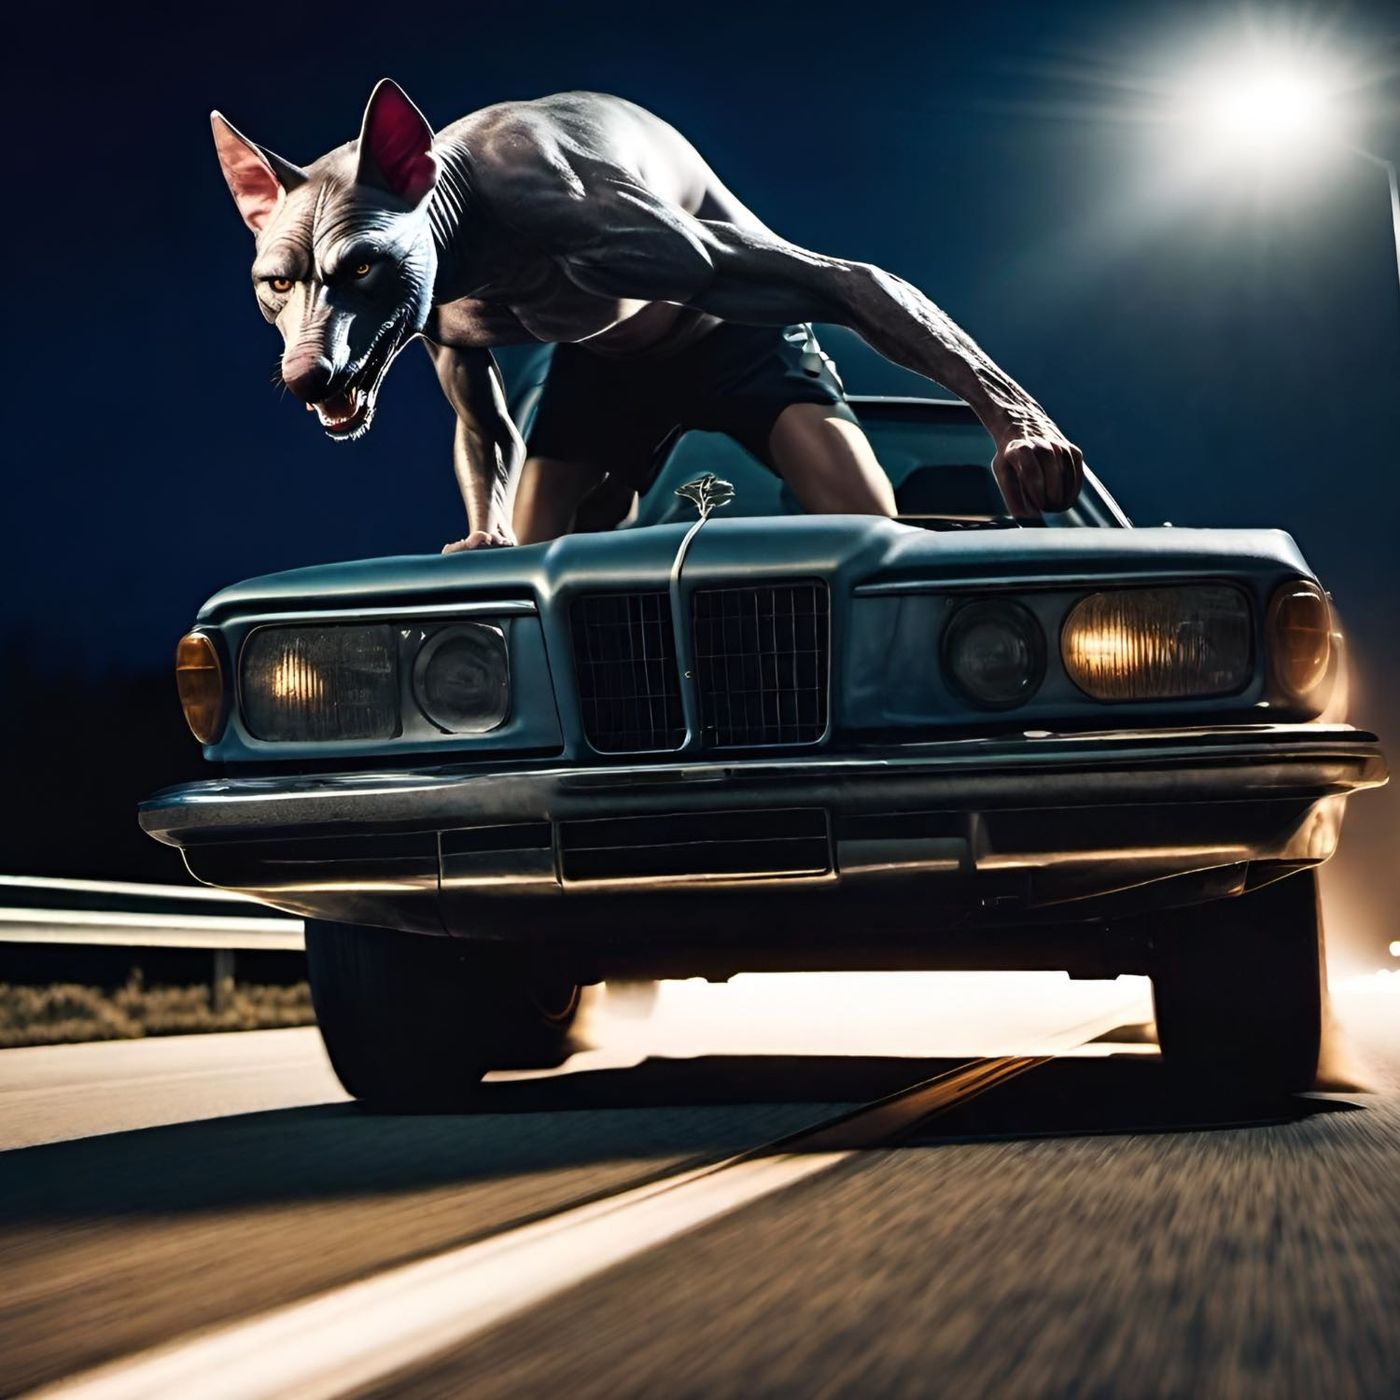 Ep. 2: Highway Horrors (Dogman Encounter)